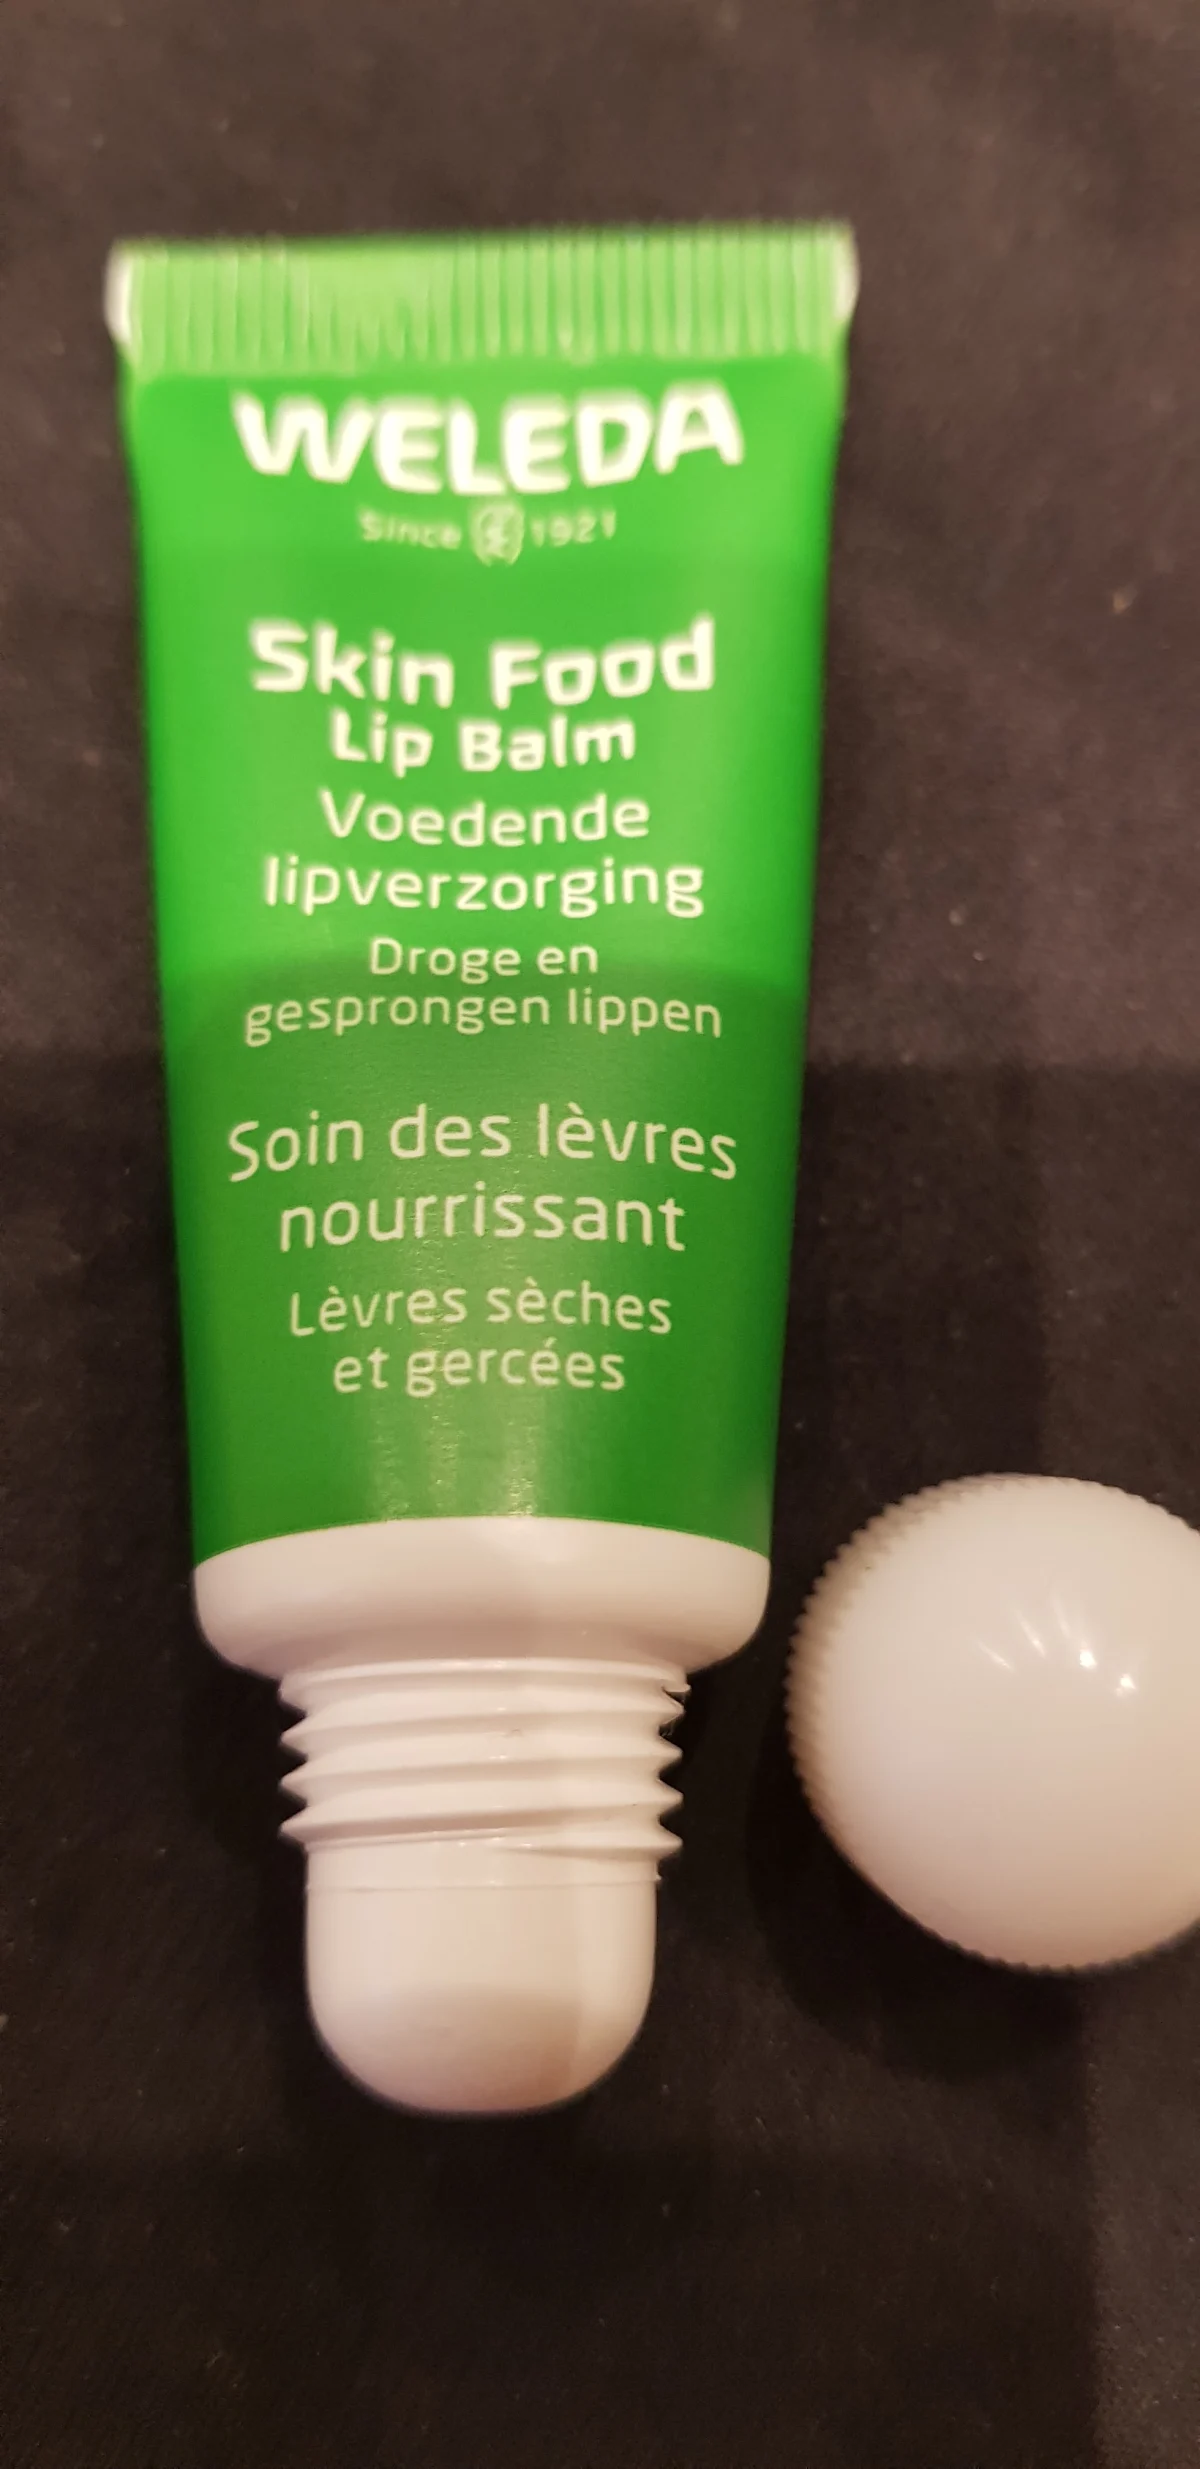 Skin Food Lip Balm - review image